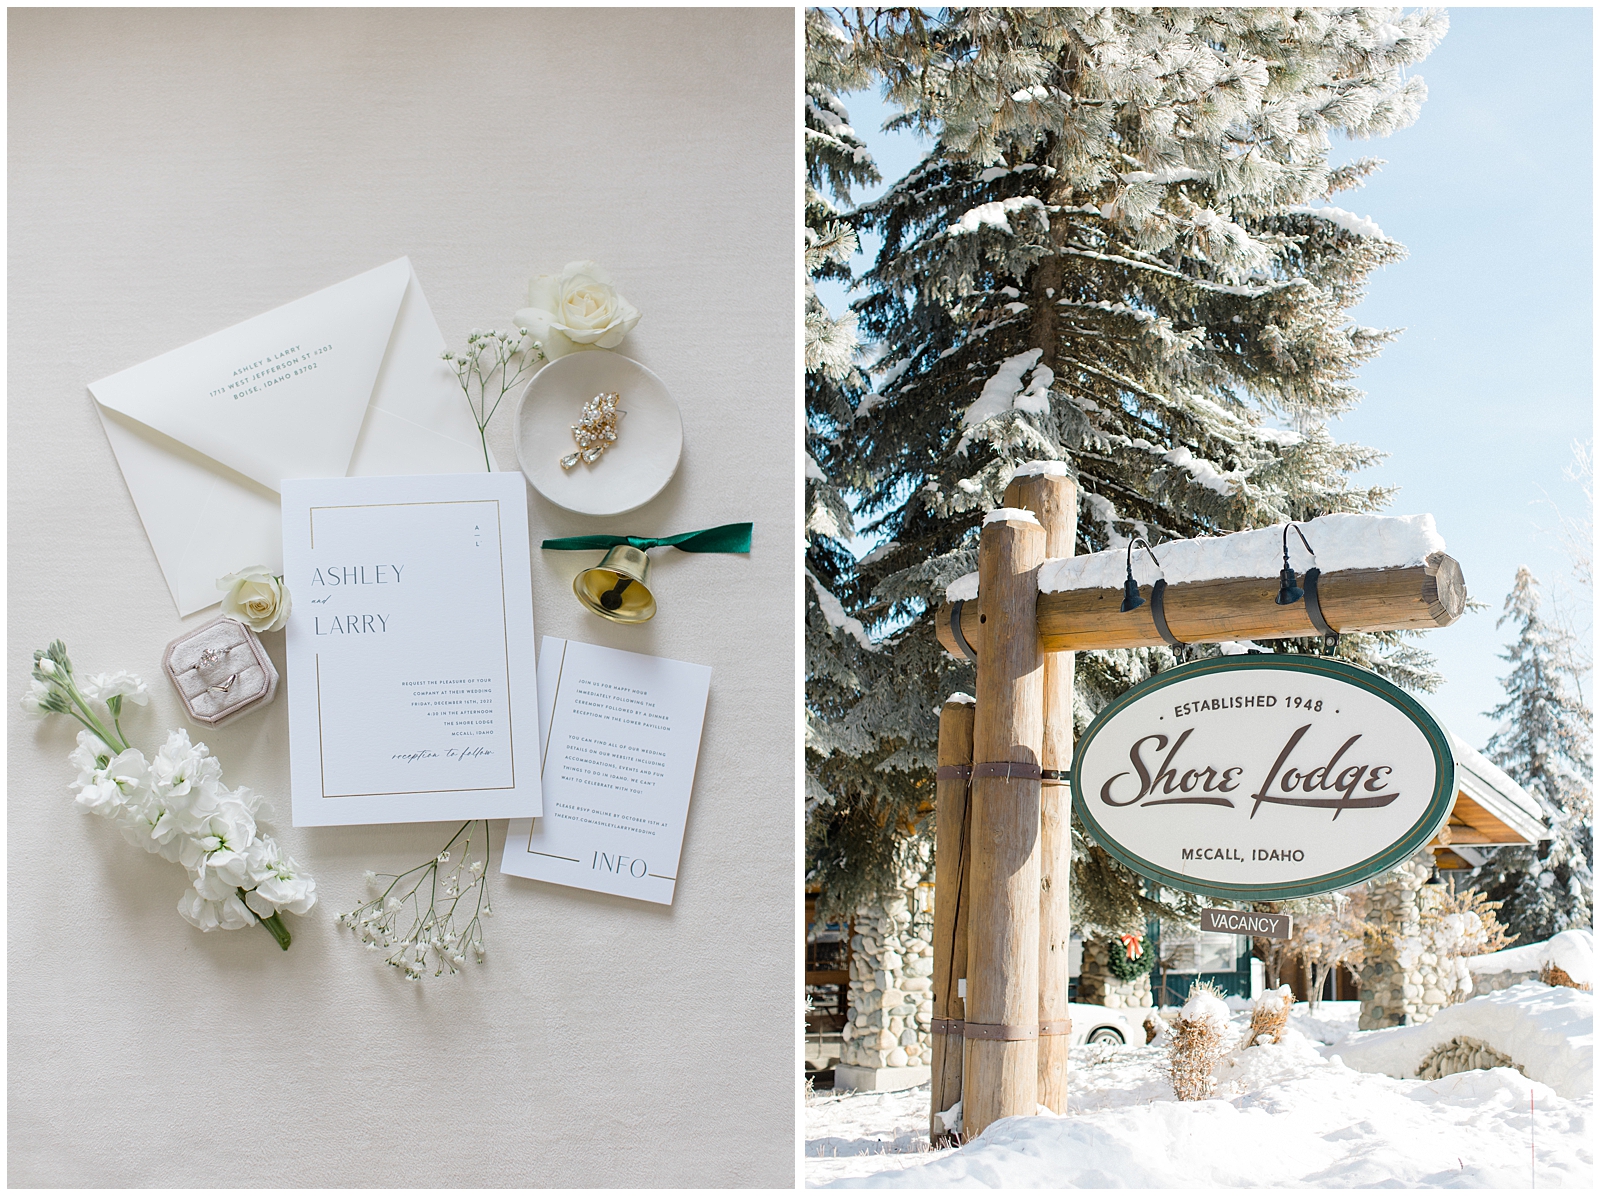 Shore Lodge Winter Wedding in McCall Idaho